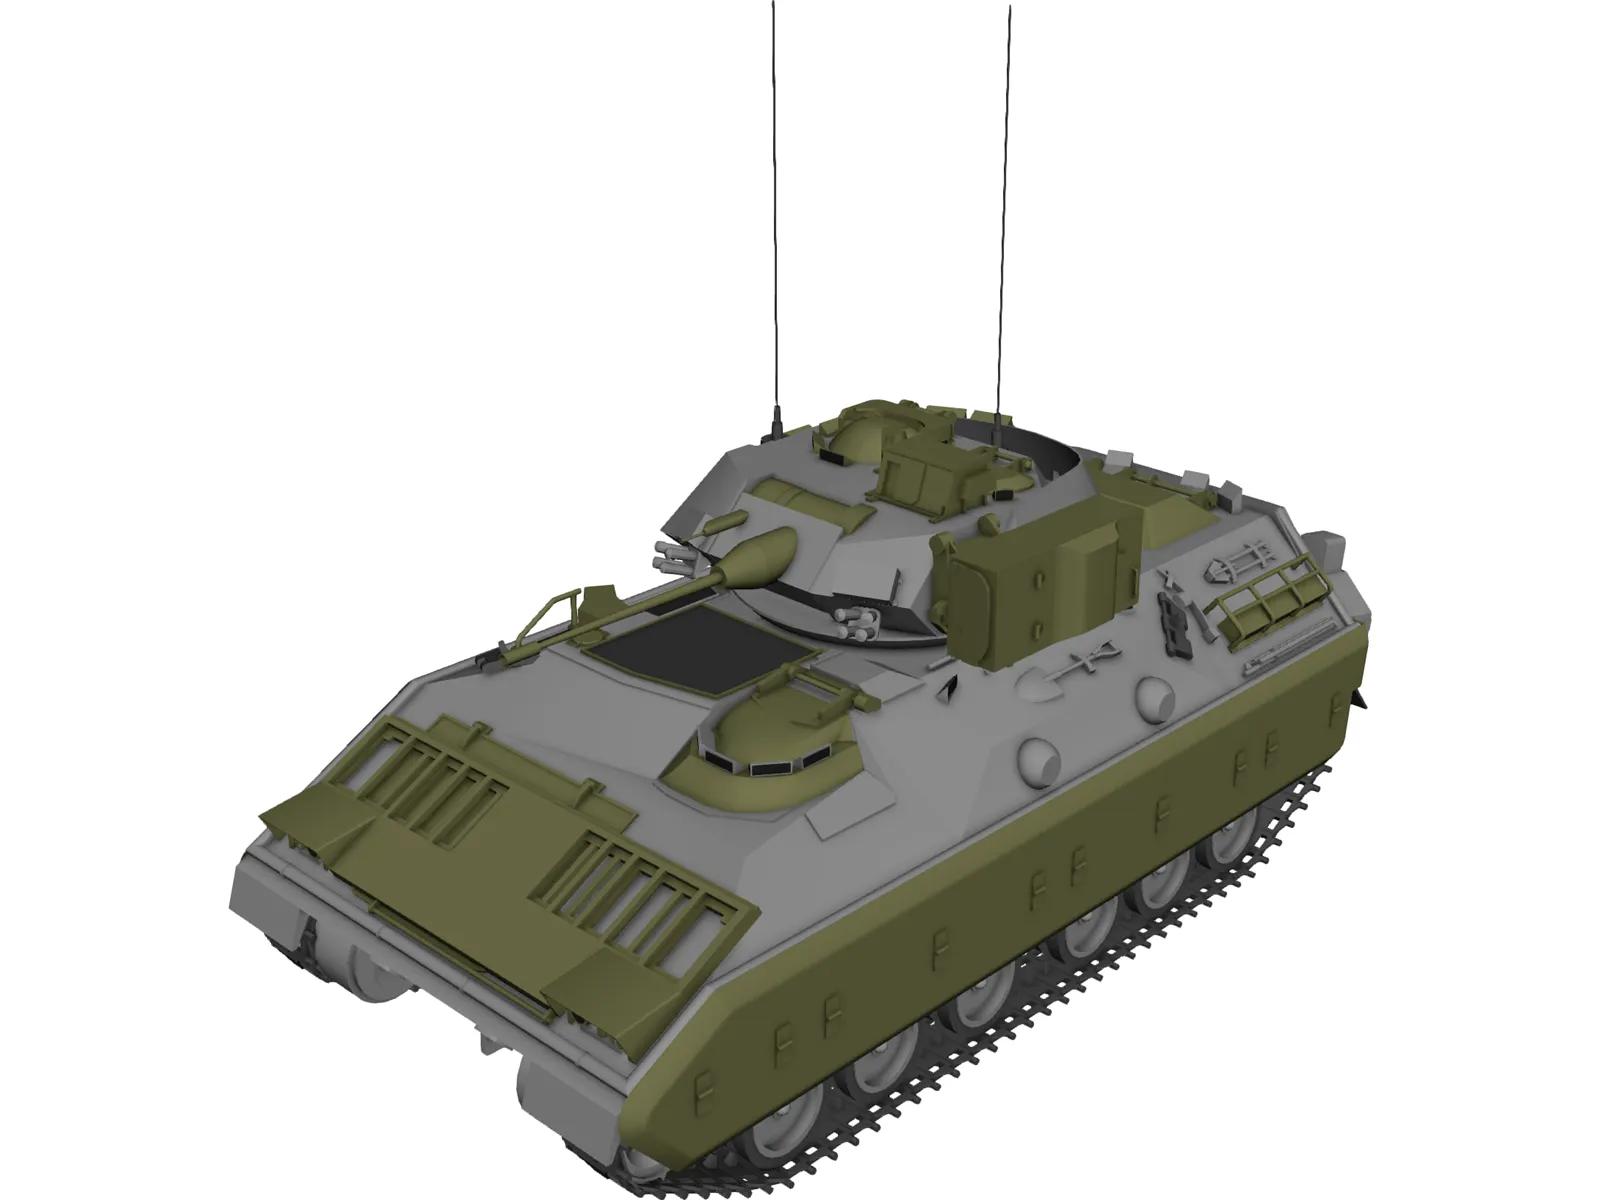 M3 Bradley 3D Model